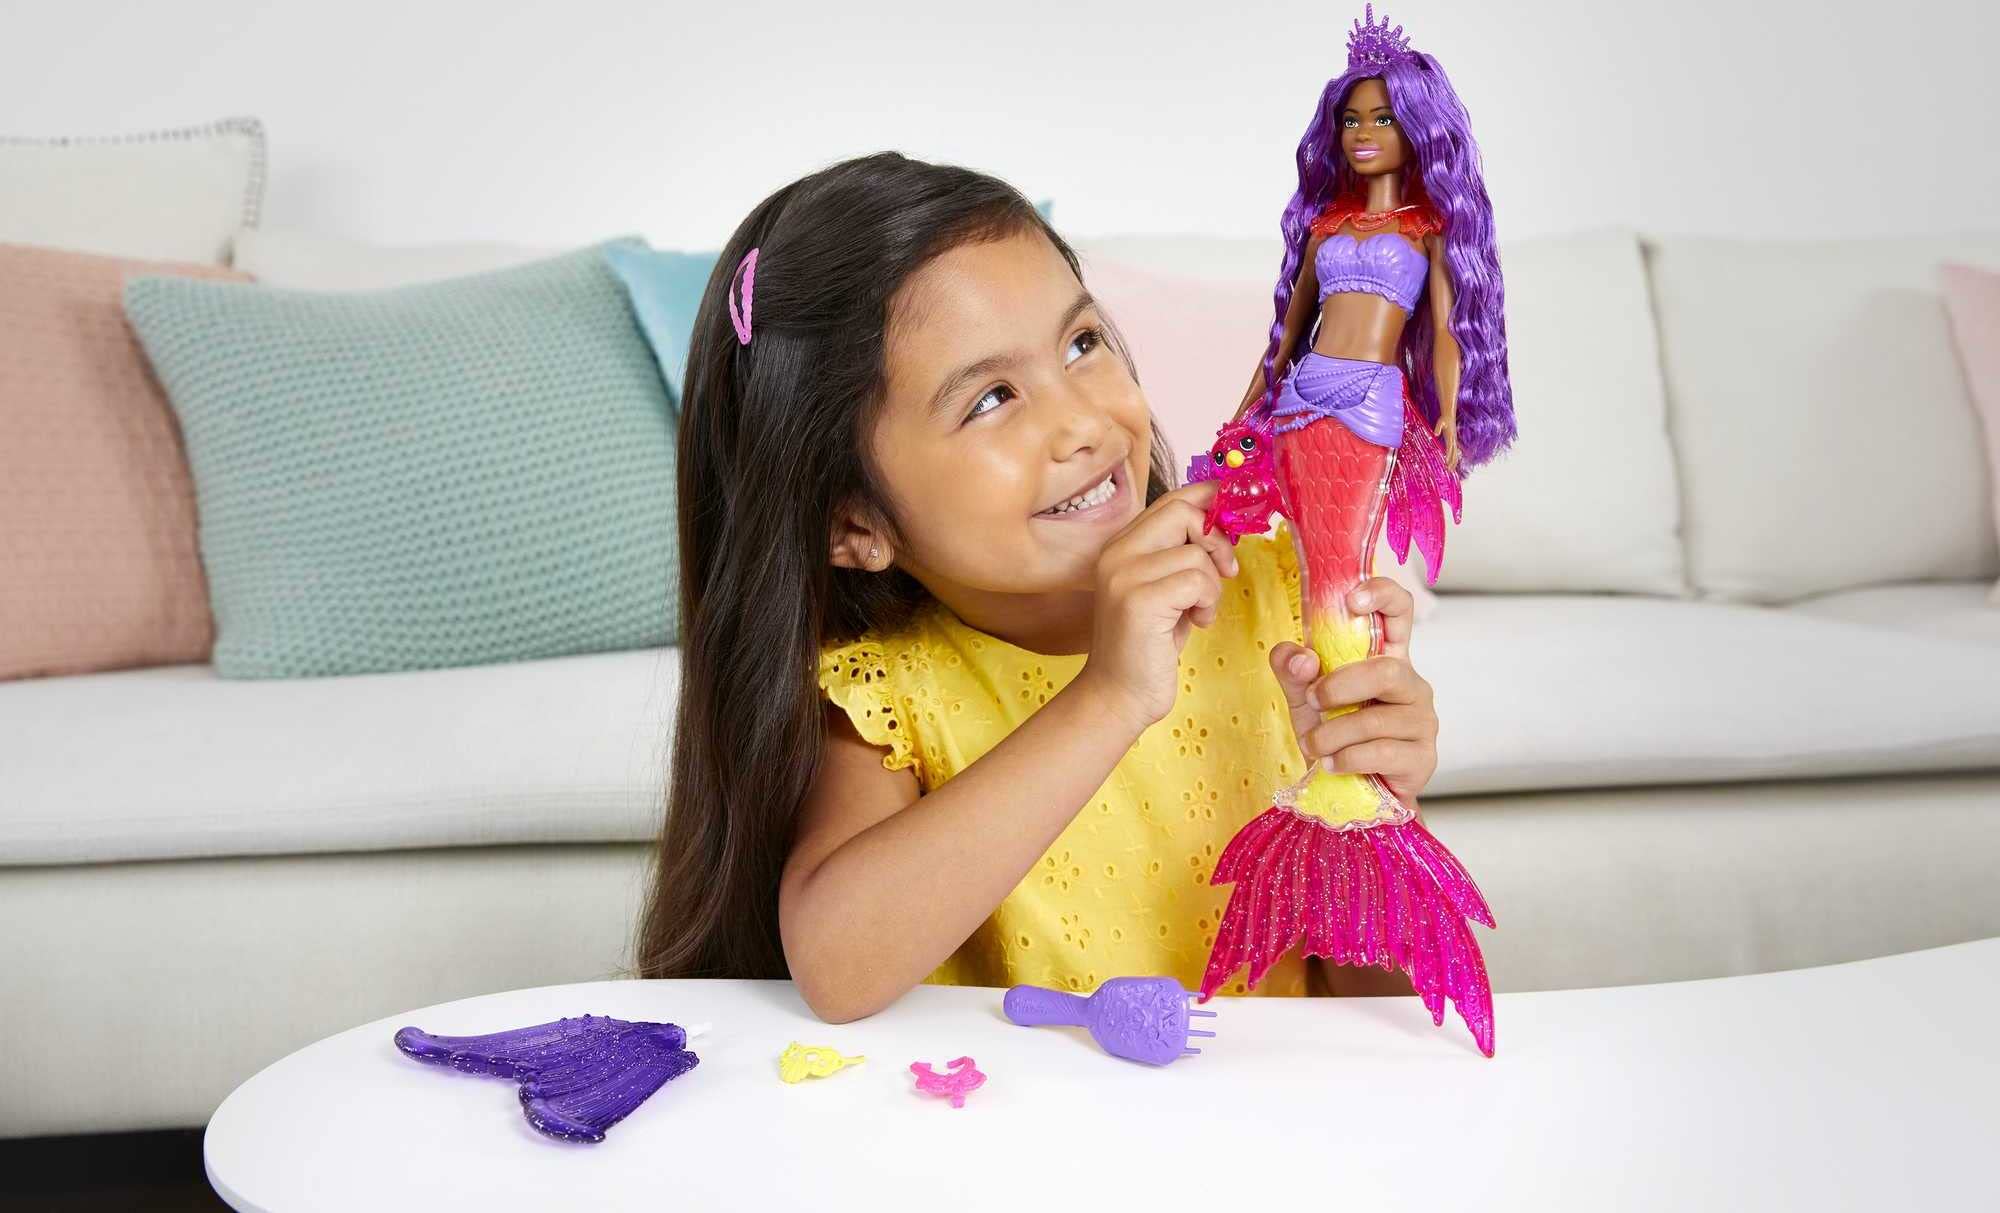 12.75" Barbie Mermaid Brooklyn Doll w/ Phoenix Pet & Accessories​​​ $9.79 + Free Shipping w/ Prime or on $25+